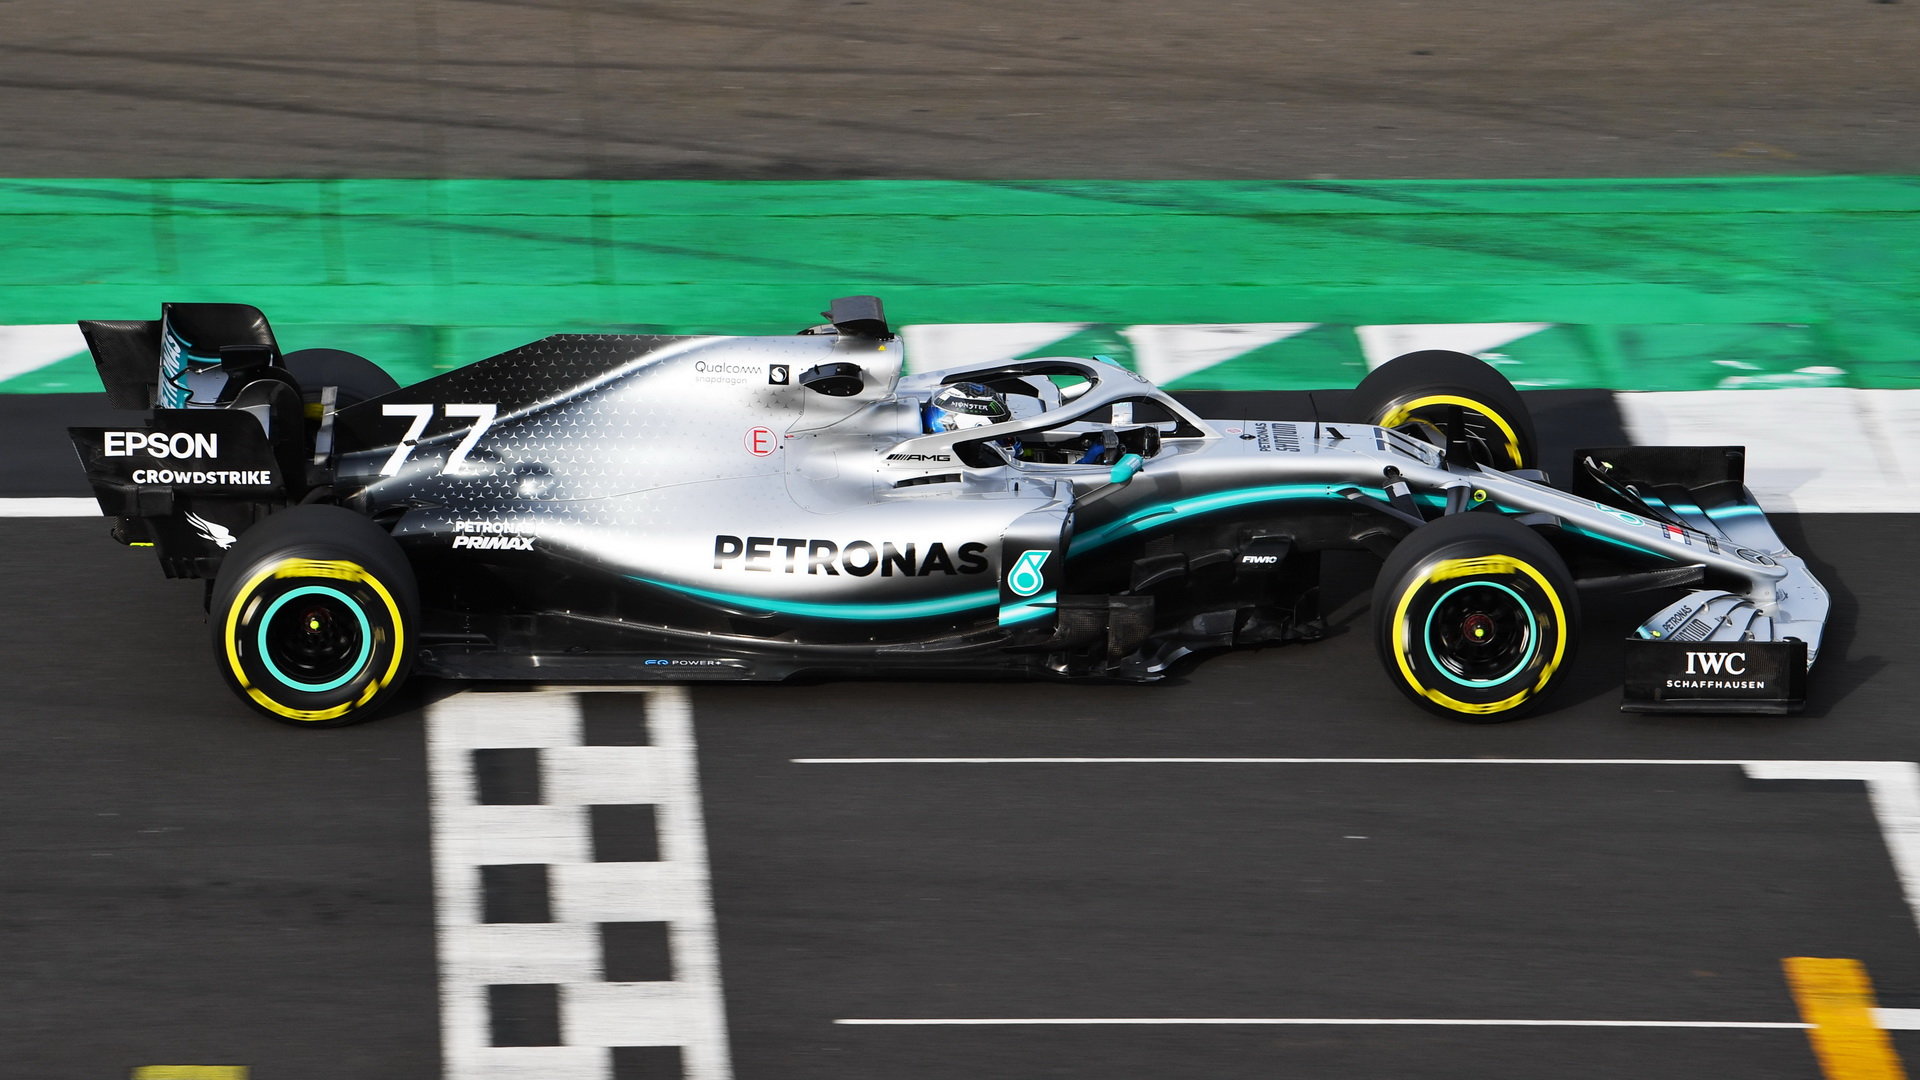 Valtteri Bottas poprvé v novém voze Mercedes F1 W10 EQ Power+ na trati v Silverstone